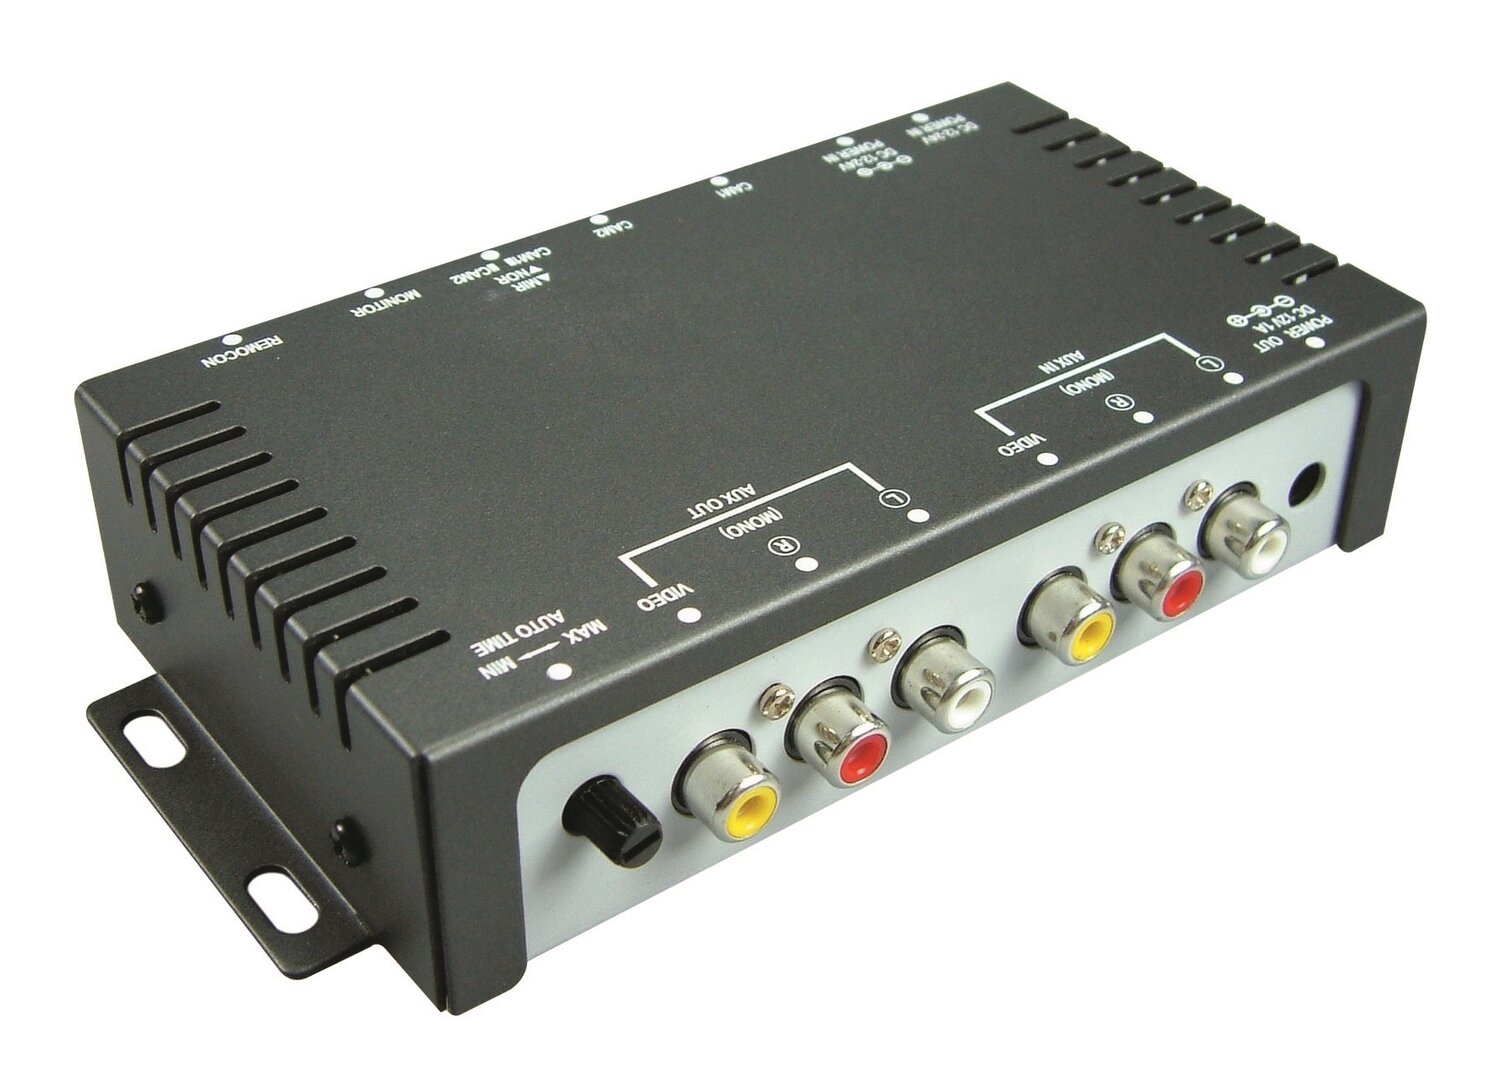 Control box 2 camera inputs + VCR input